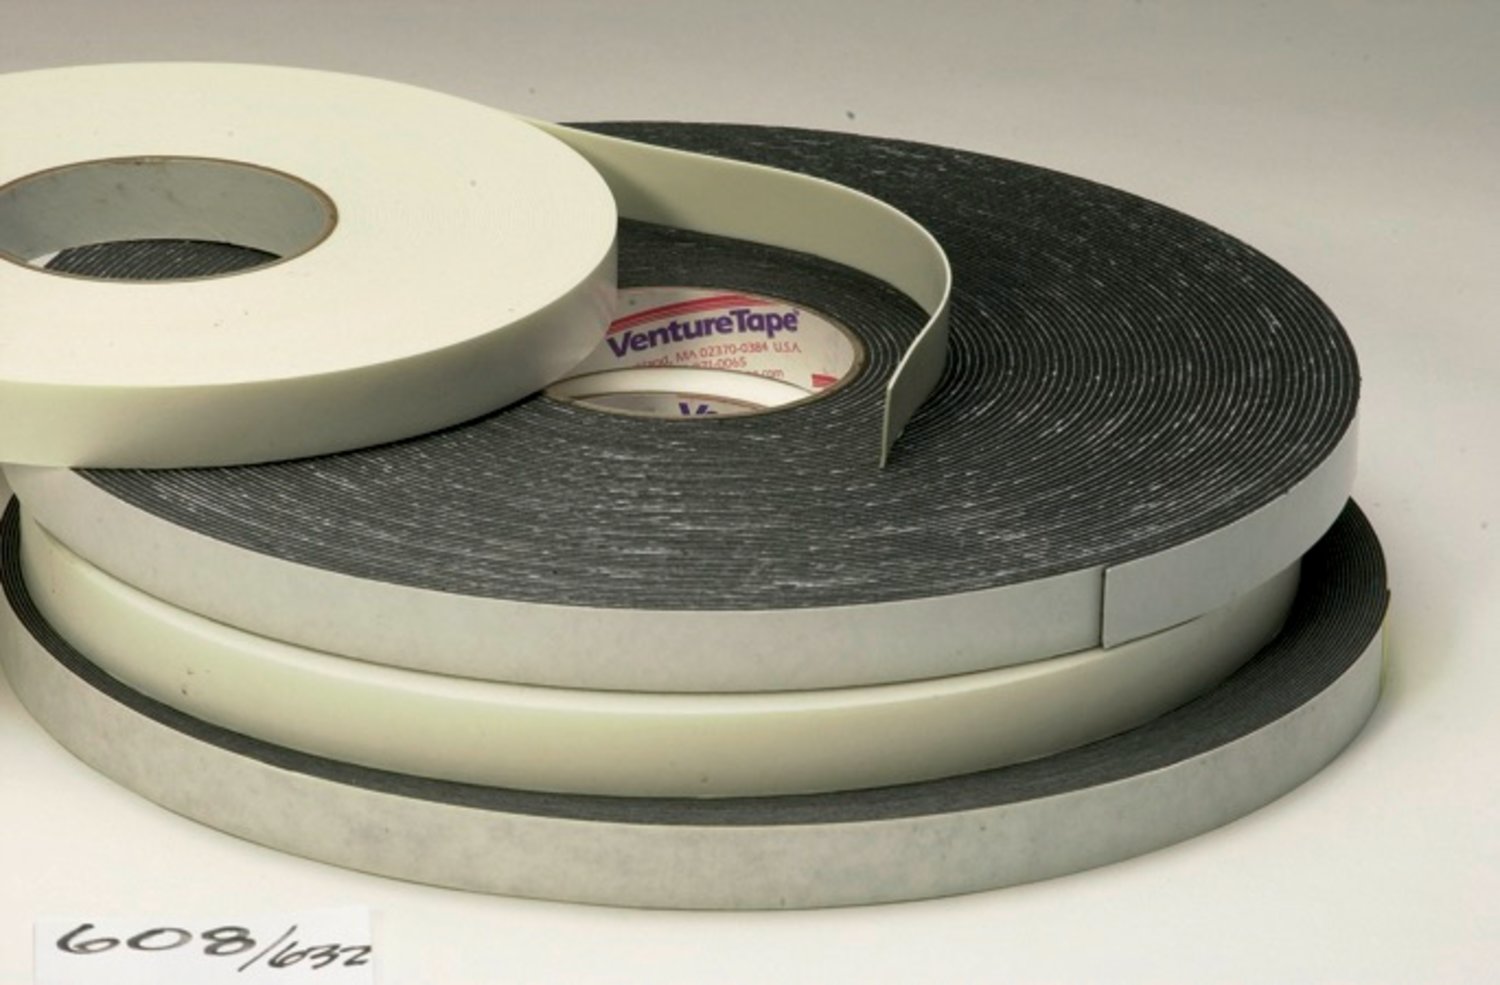 7010379963 - 3M Venture Tape Double Sided Polyethylene Foam Glazing Tape VG1216,
White. 3/8 in x 150 ft, 62 mil, 53 rolls per case